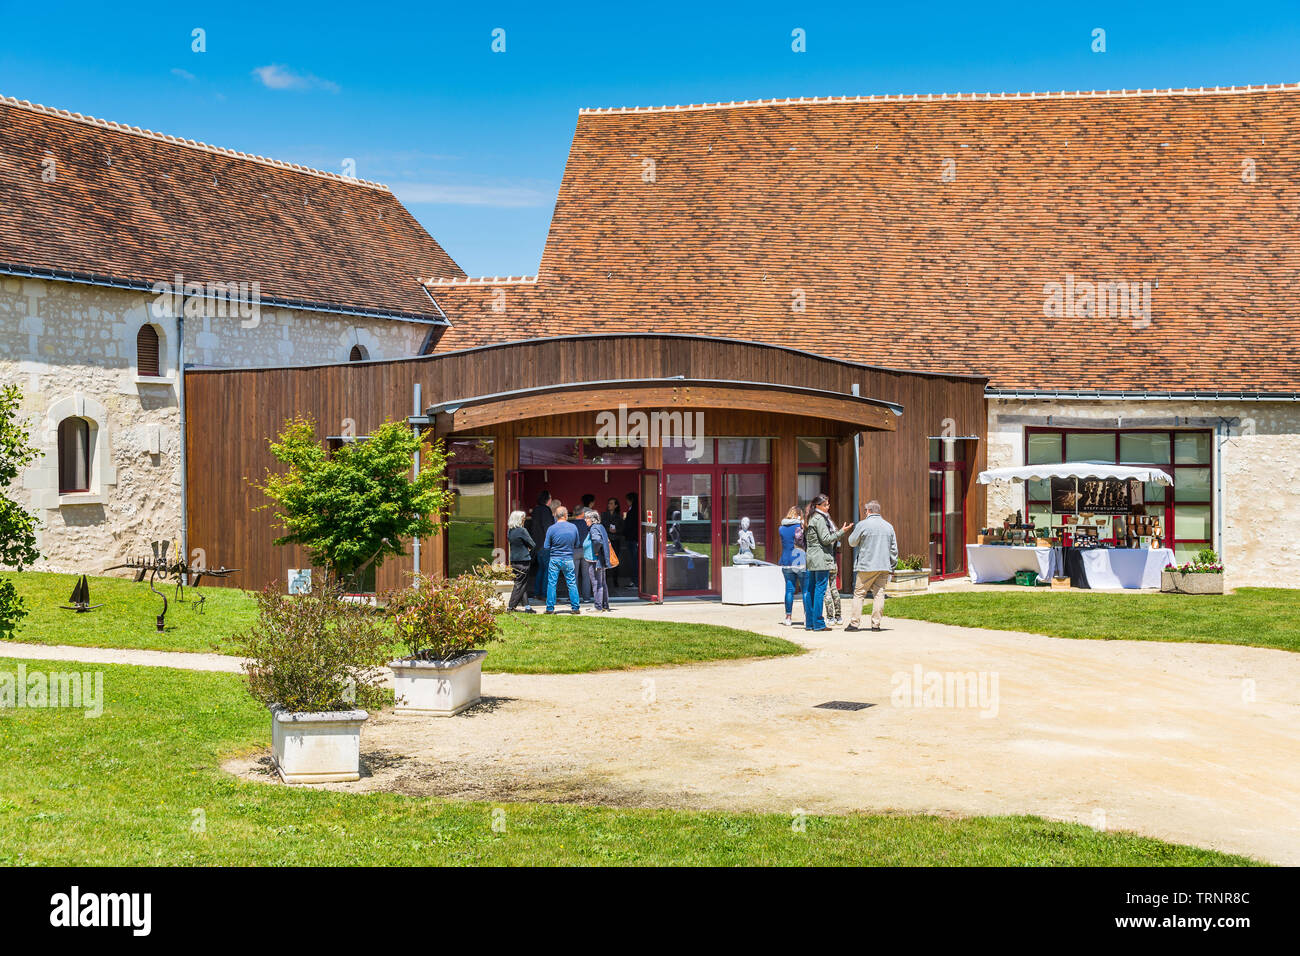 Exhibition hall, theatre exterior - 'Salle de Spectacle', Charnizay, Indre-et-Loire, France. Stock Photo